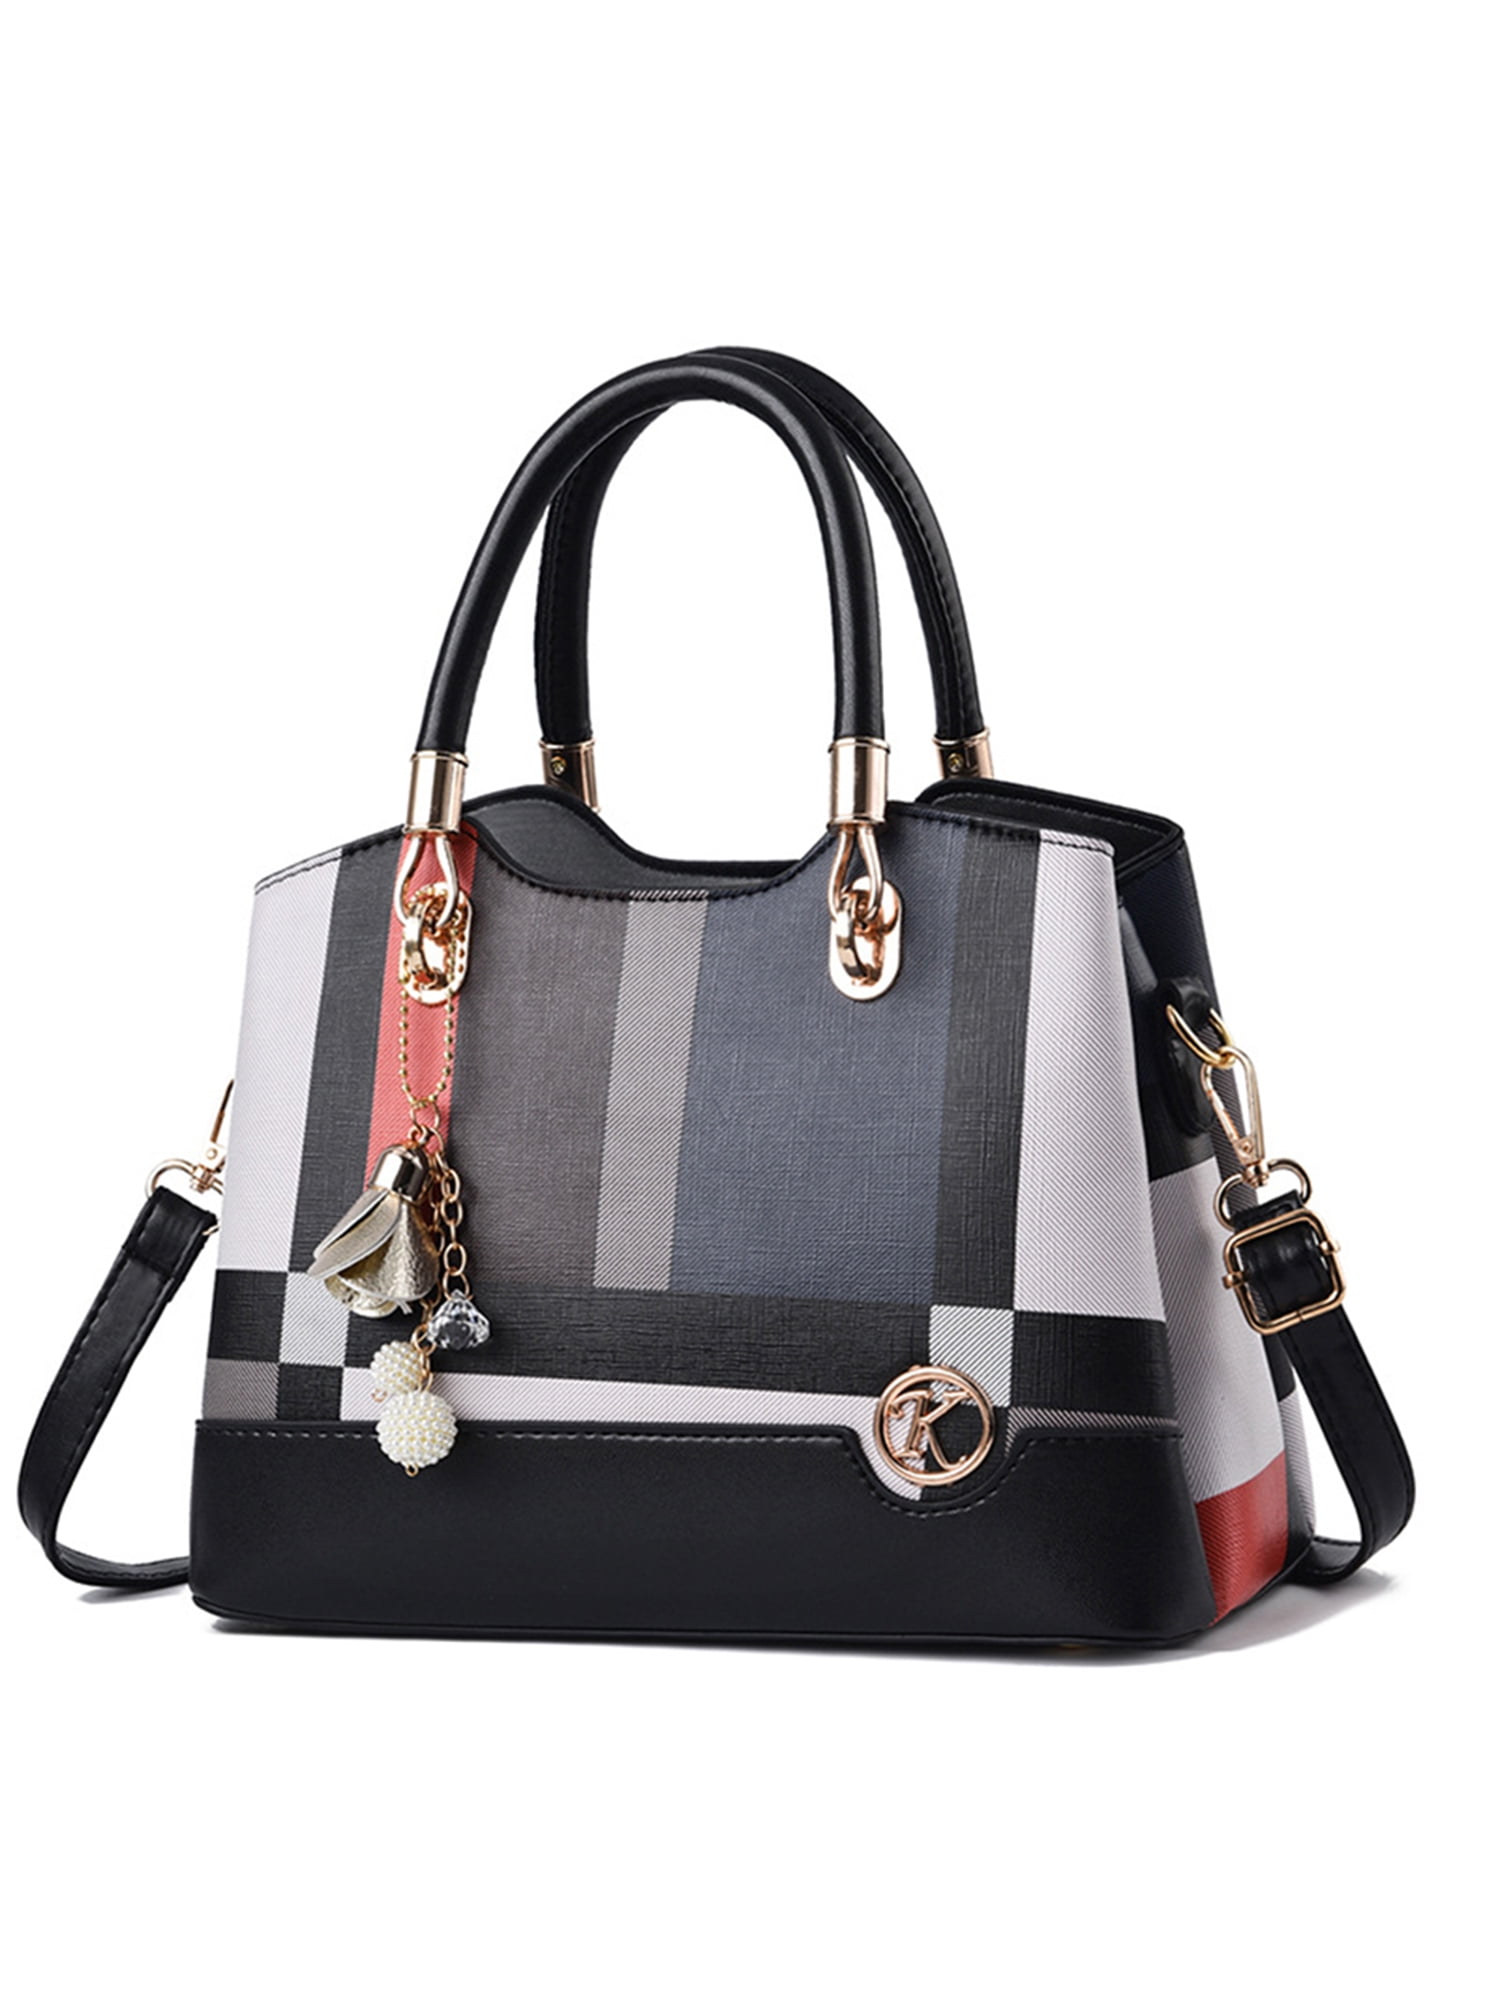 NEGBIU Tote Bags for Women, Leather Mini Tote Bag with Zipper,  Shoulder/Crossbody/Handbag(11 * 8.26 * 4.3 in)